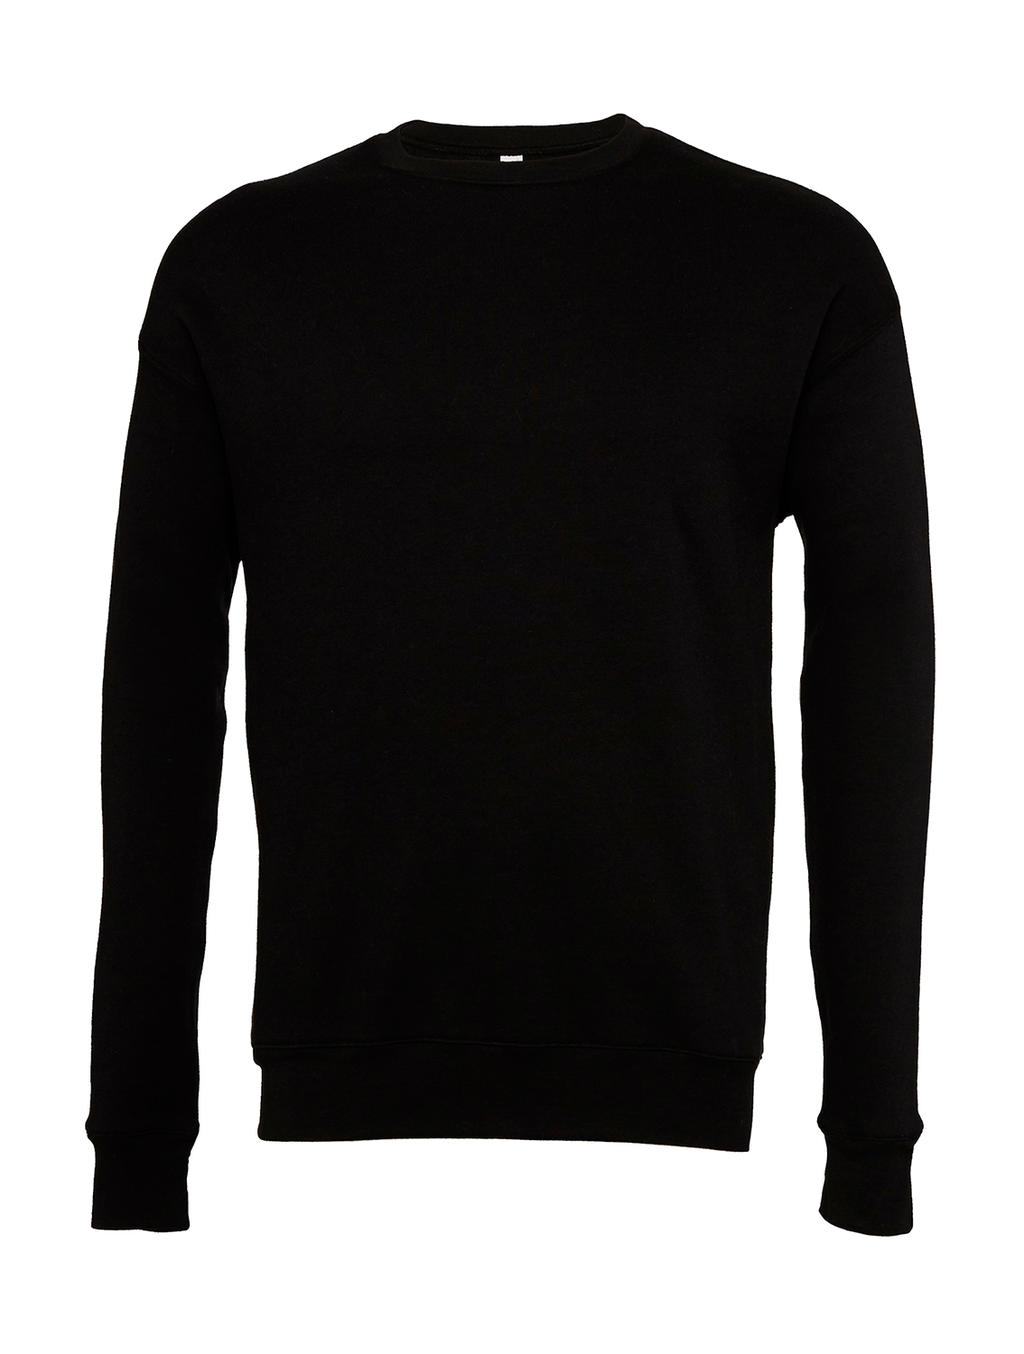  Unisex Drop Shoulder Fleece in Farbe Black